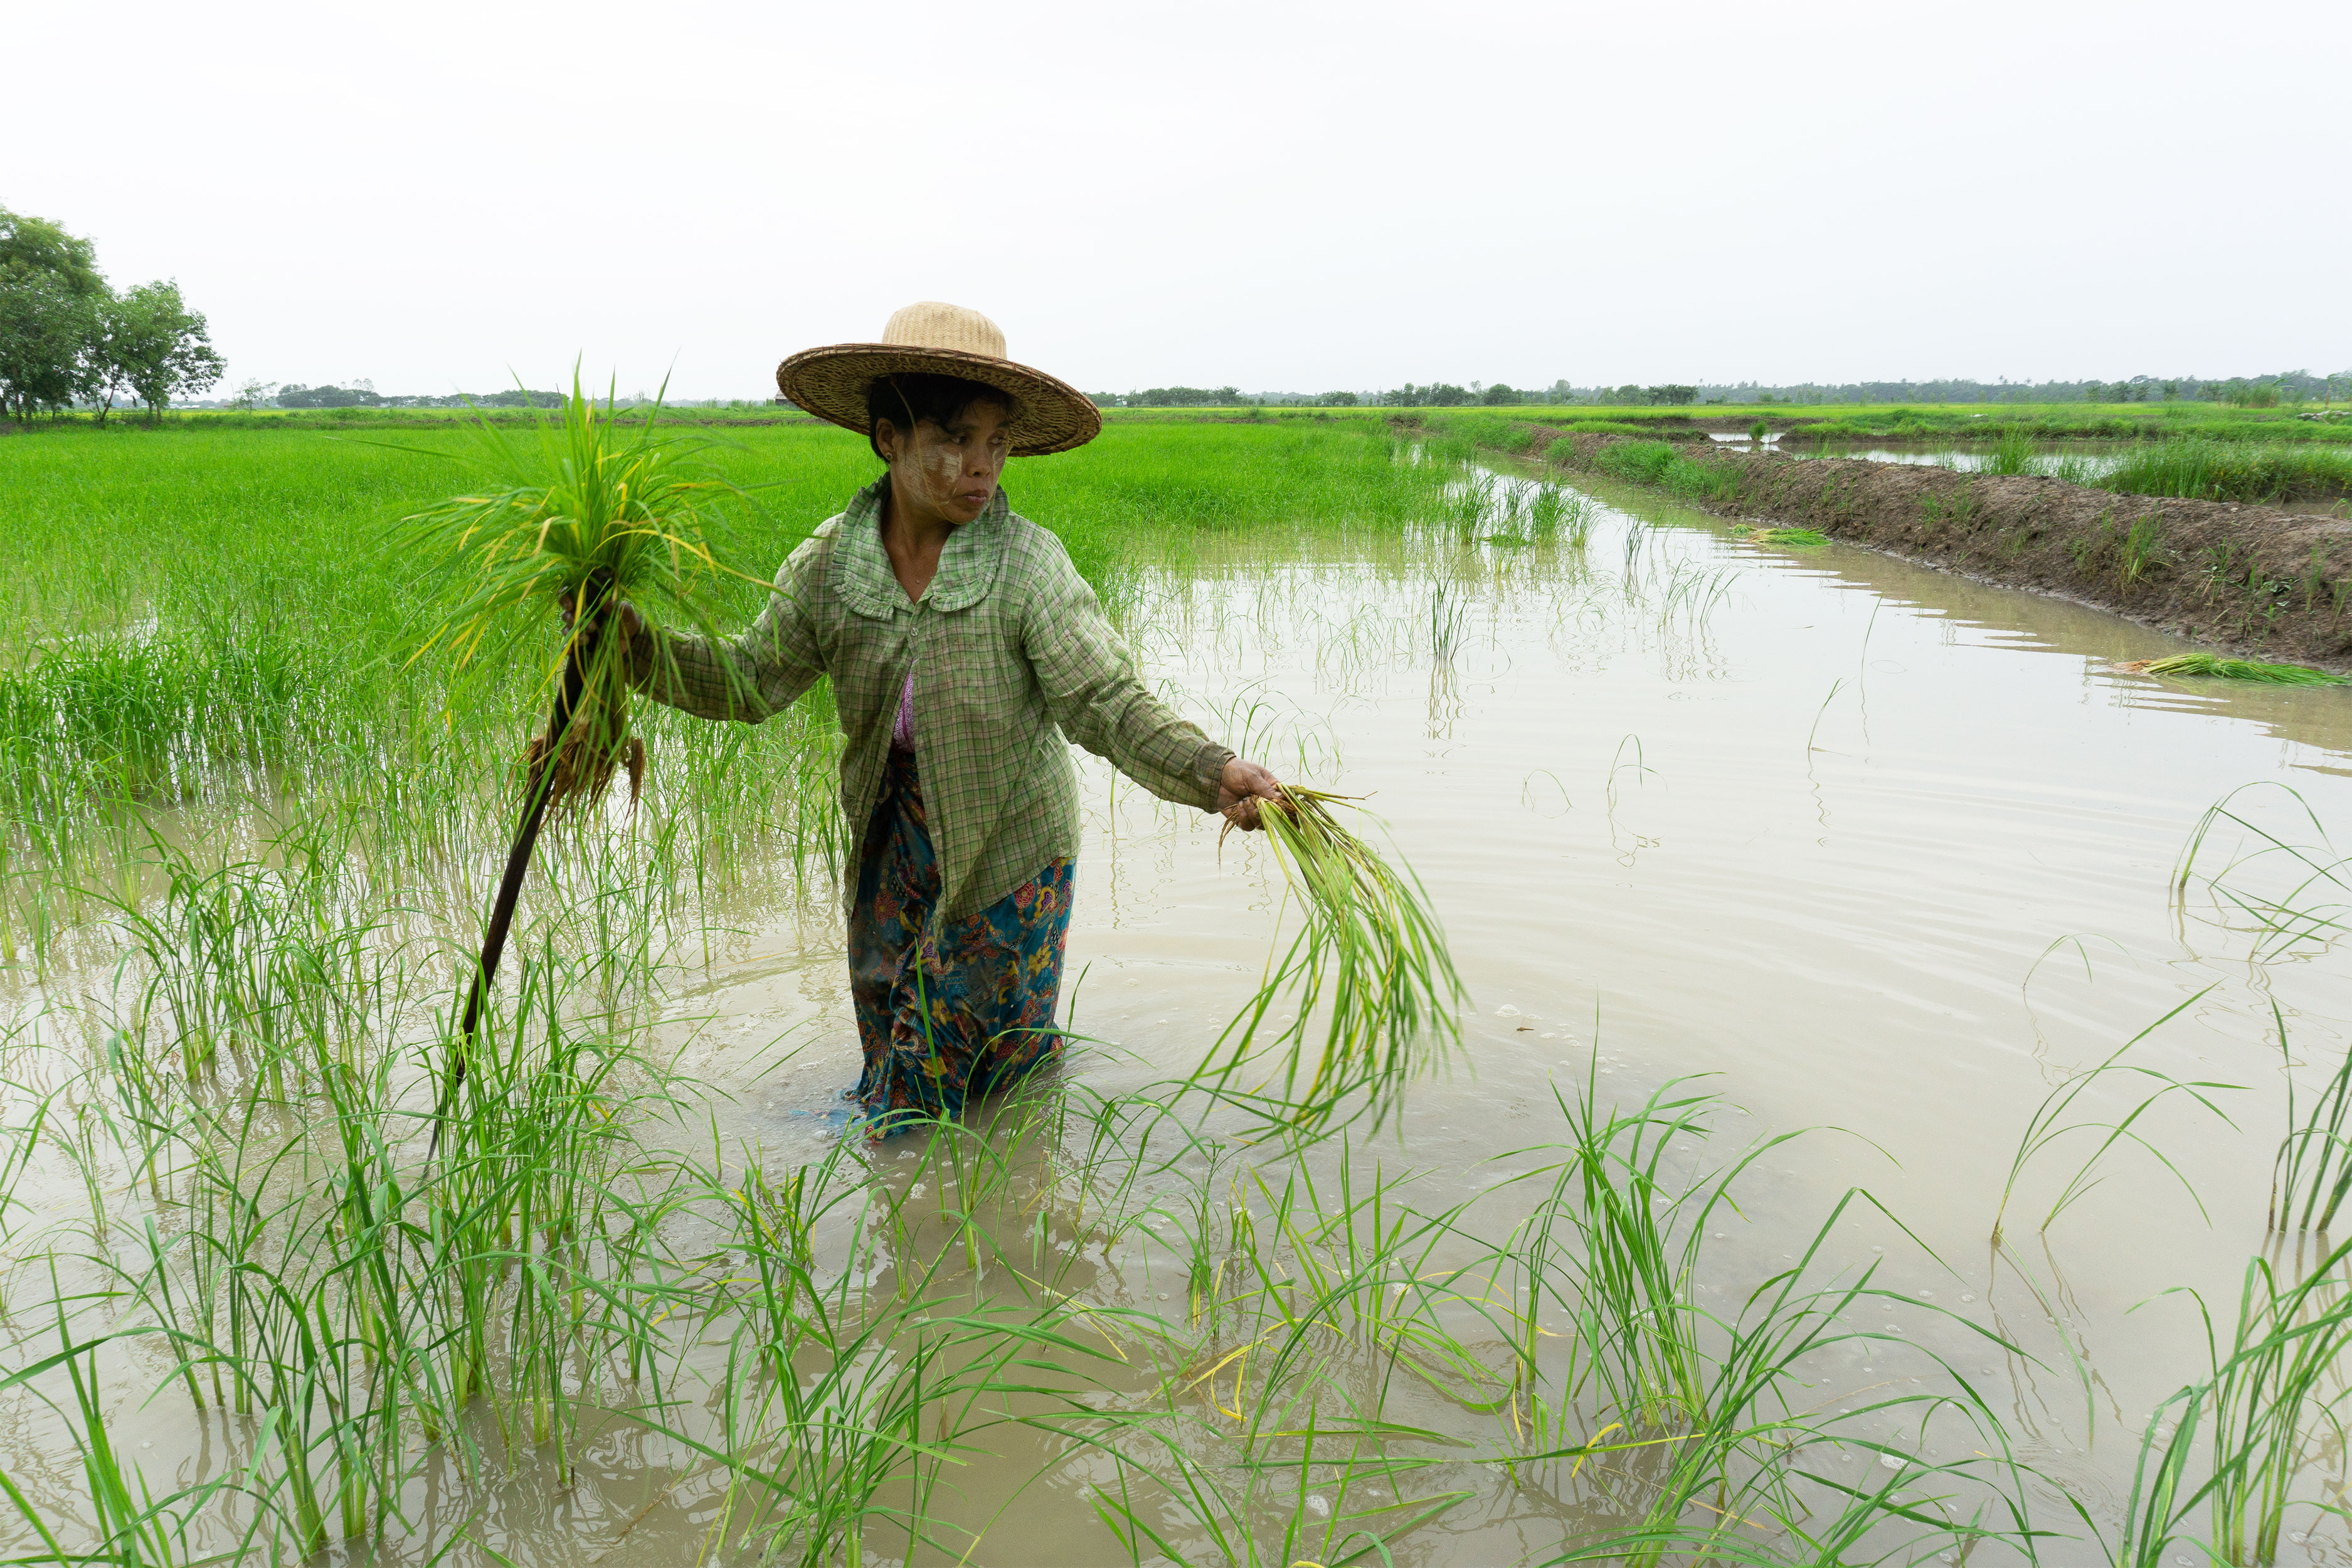 A woman in a rice field wearing a hat